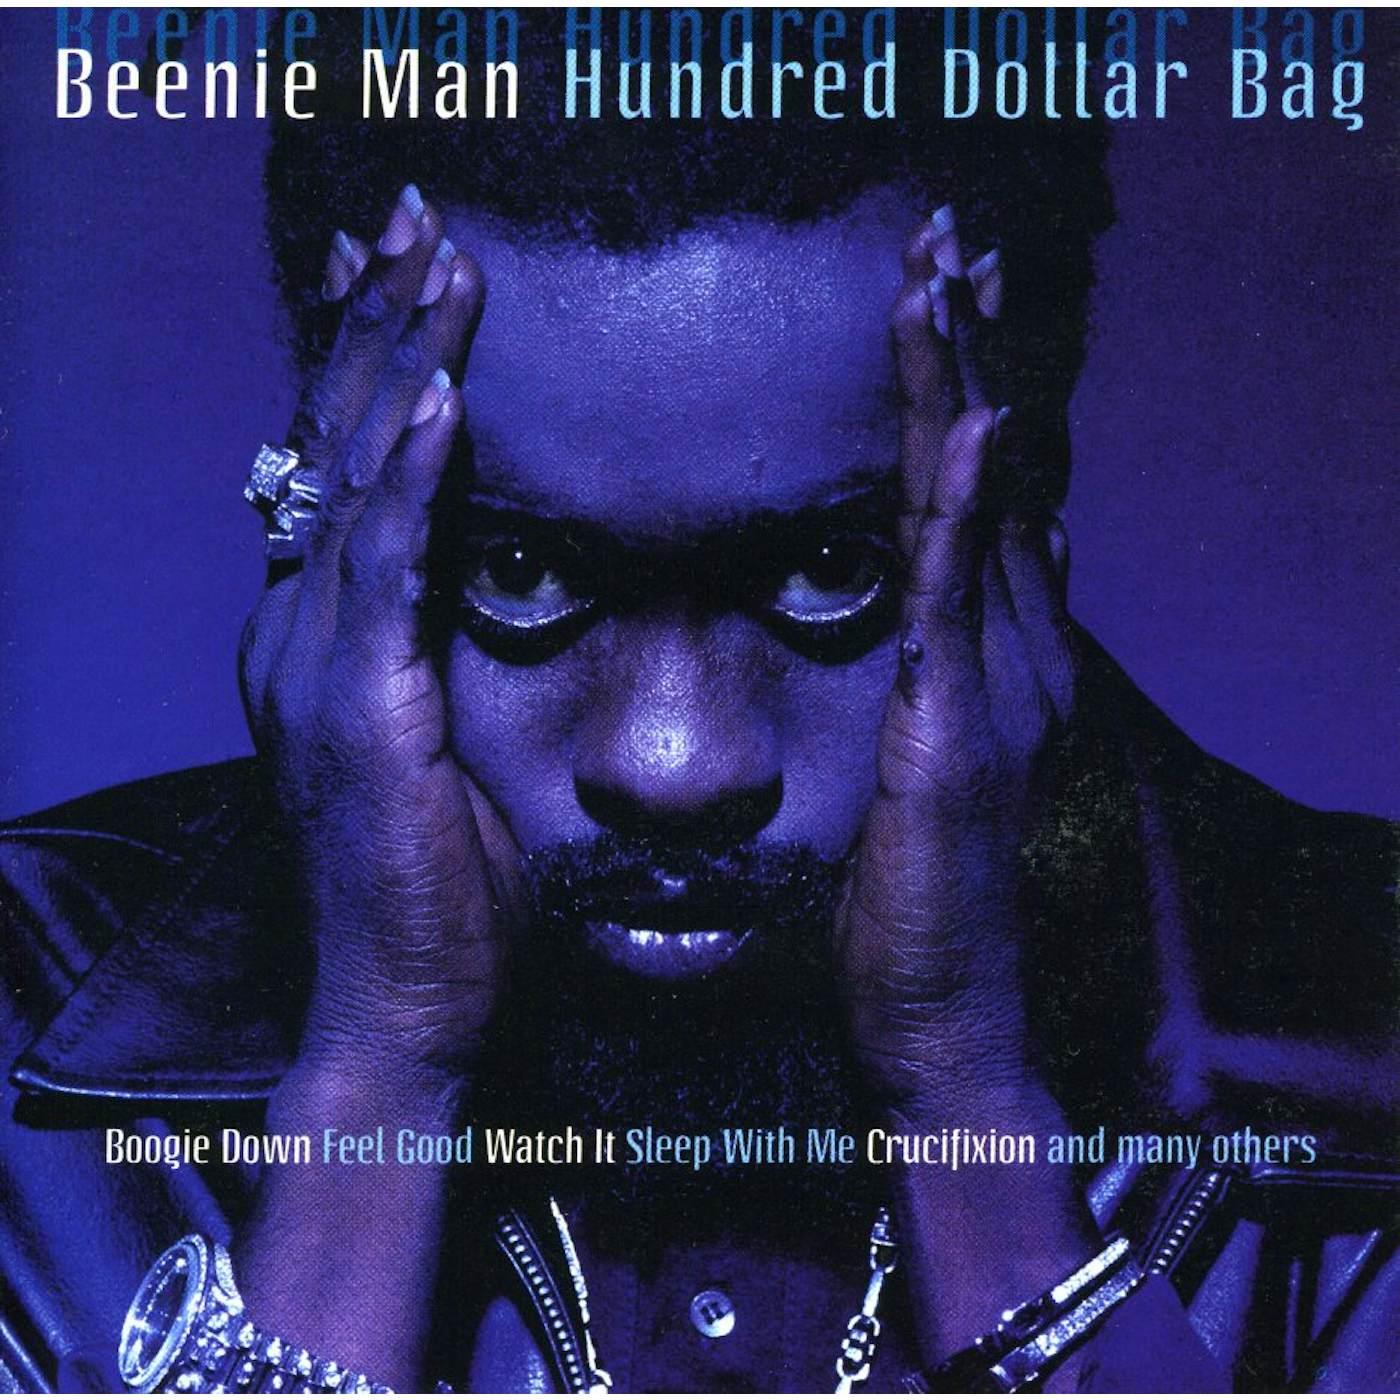 Beenie Man HUNDRED DOLLAR BAG CD